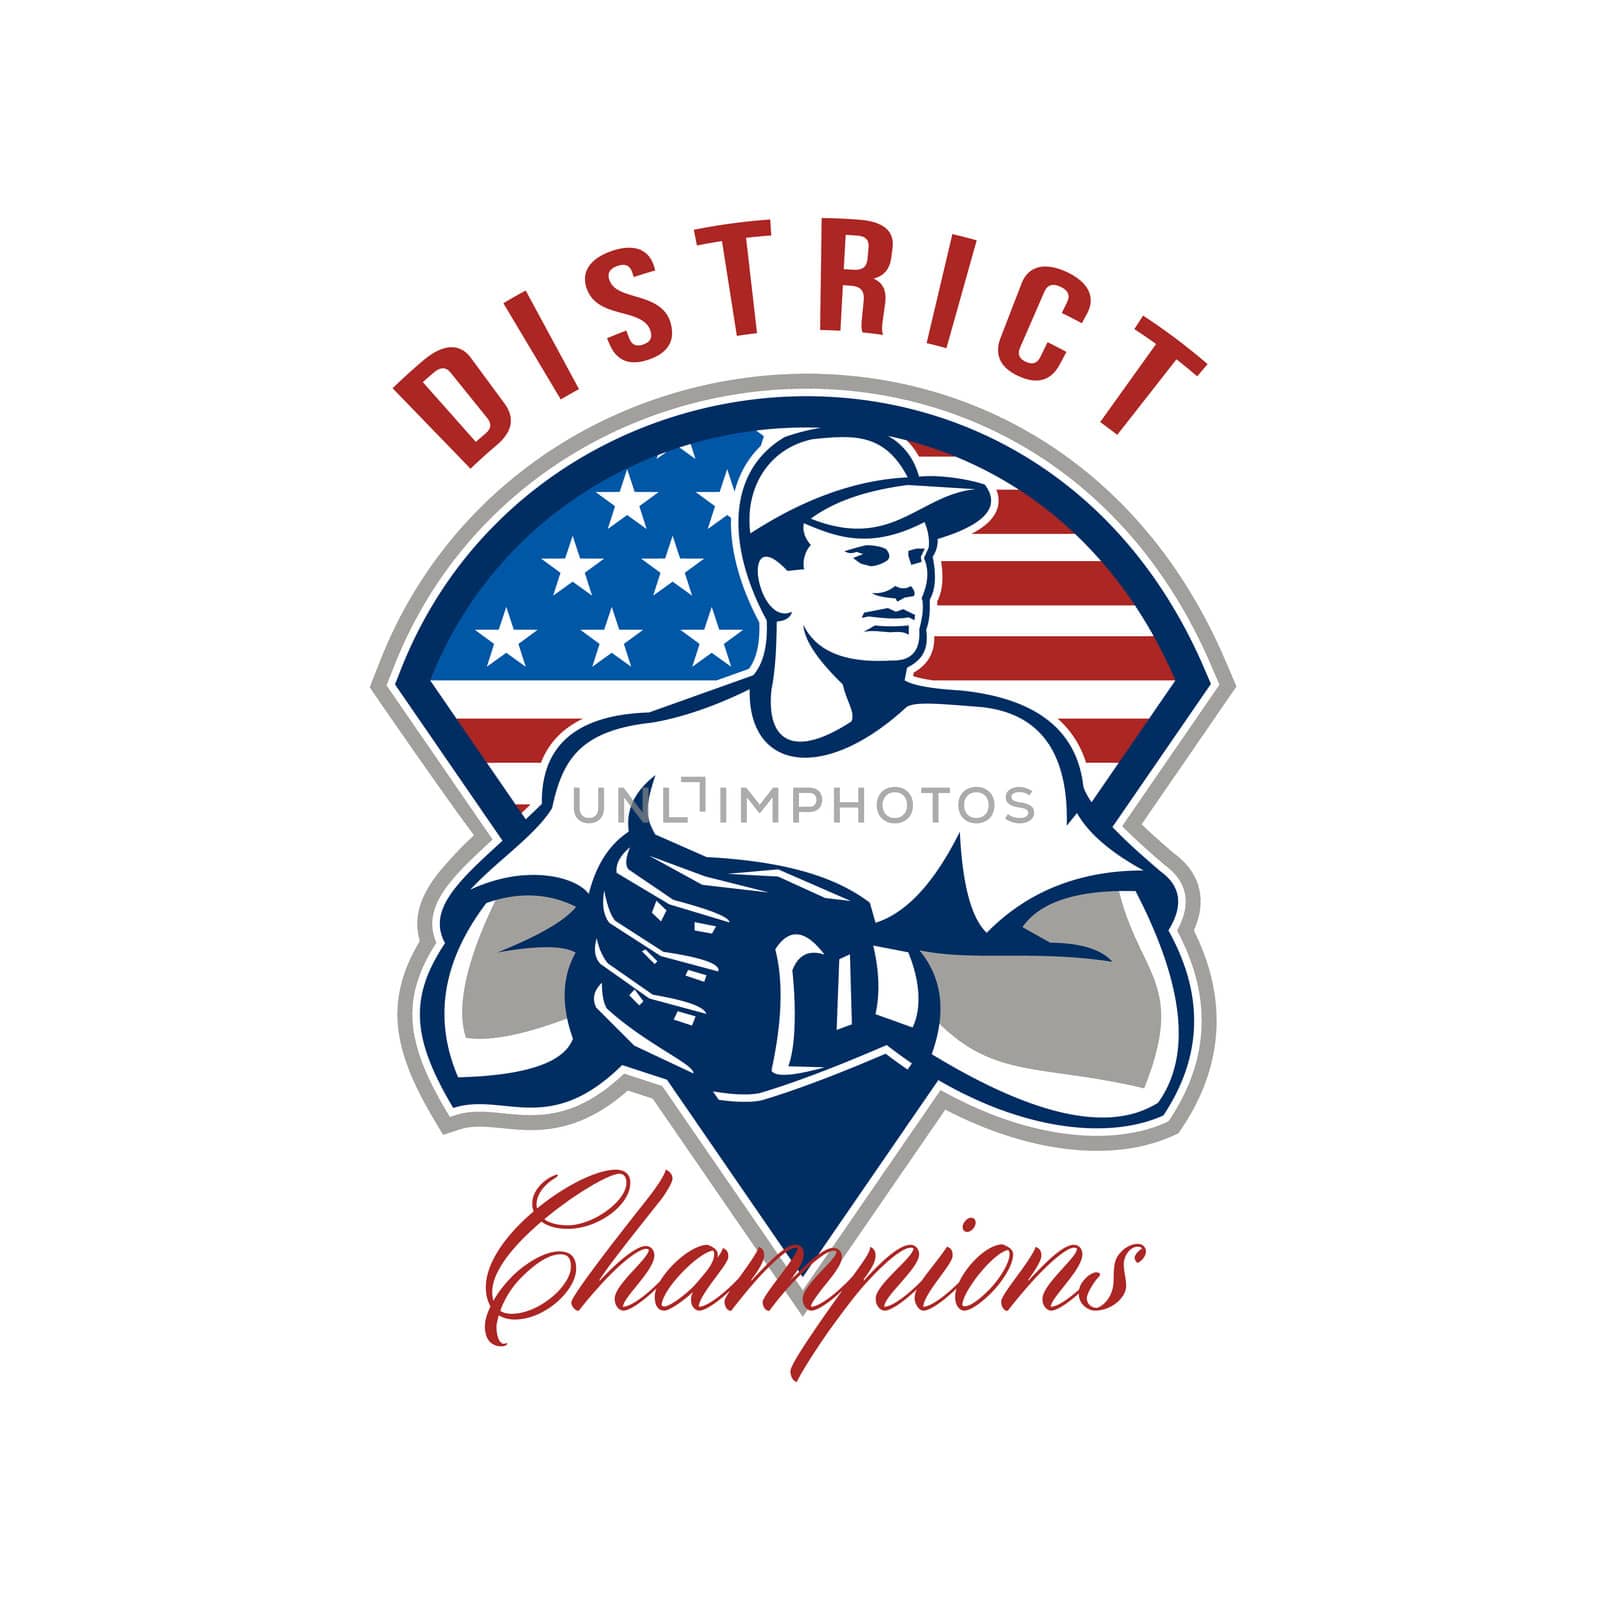 Baseball District Champions Retro by patrimonio